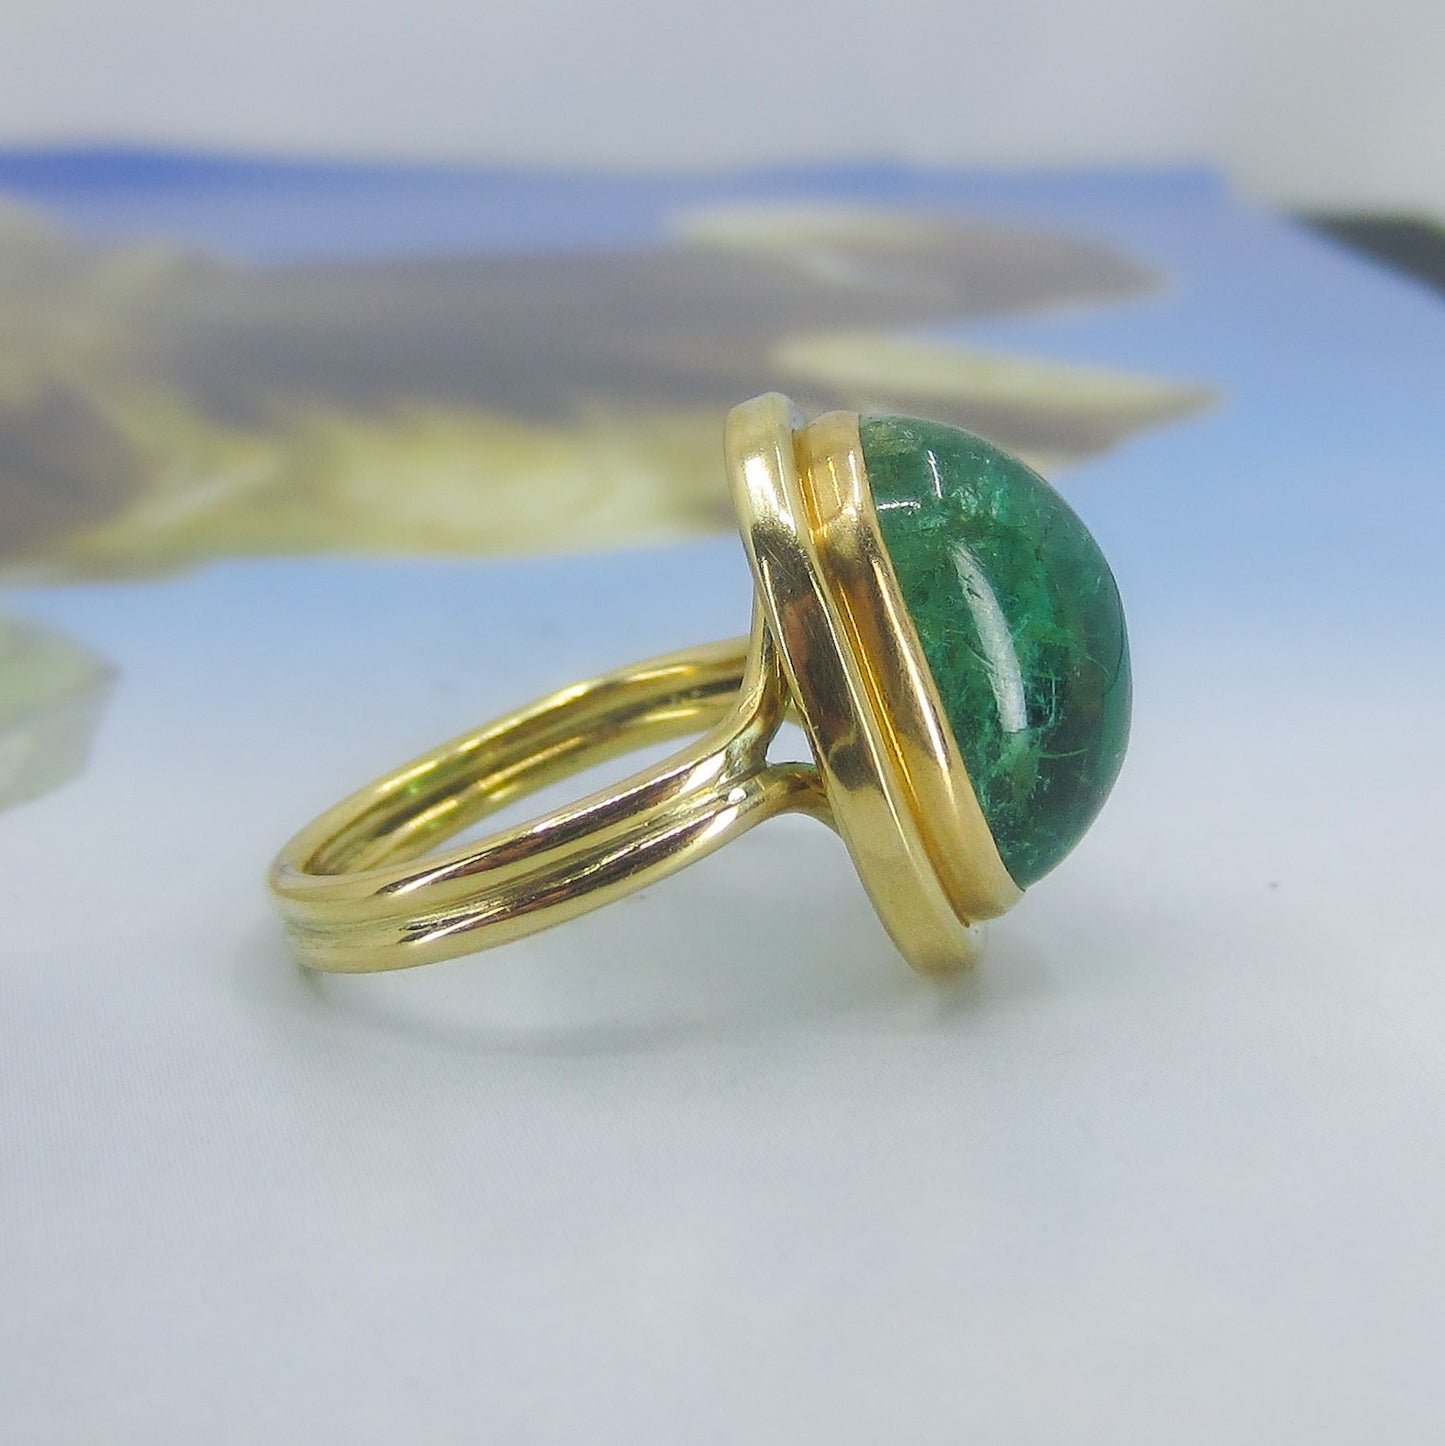 Fabulous Bezel Set 17ct Emerald Cabochon Ring 18k